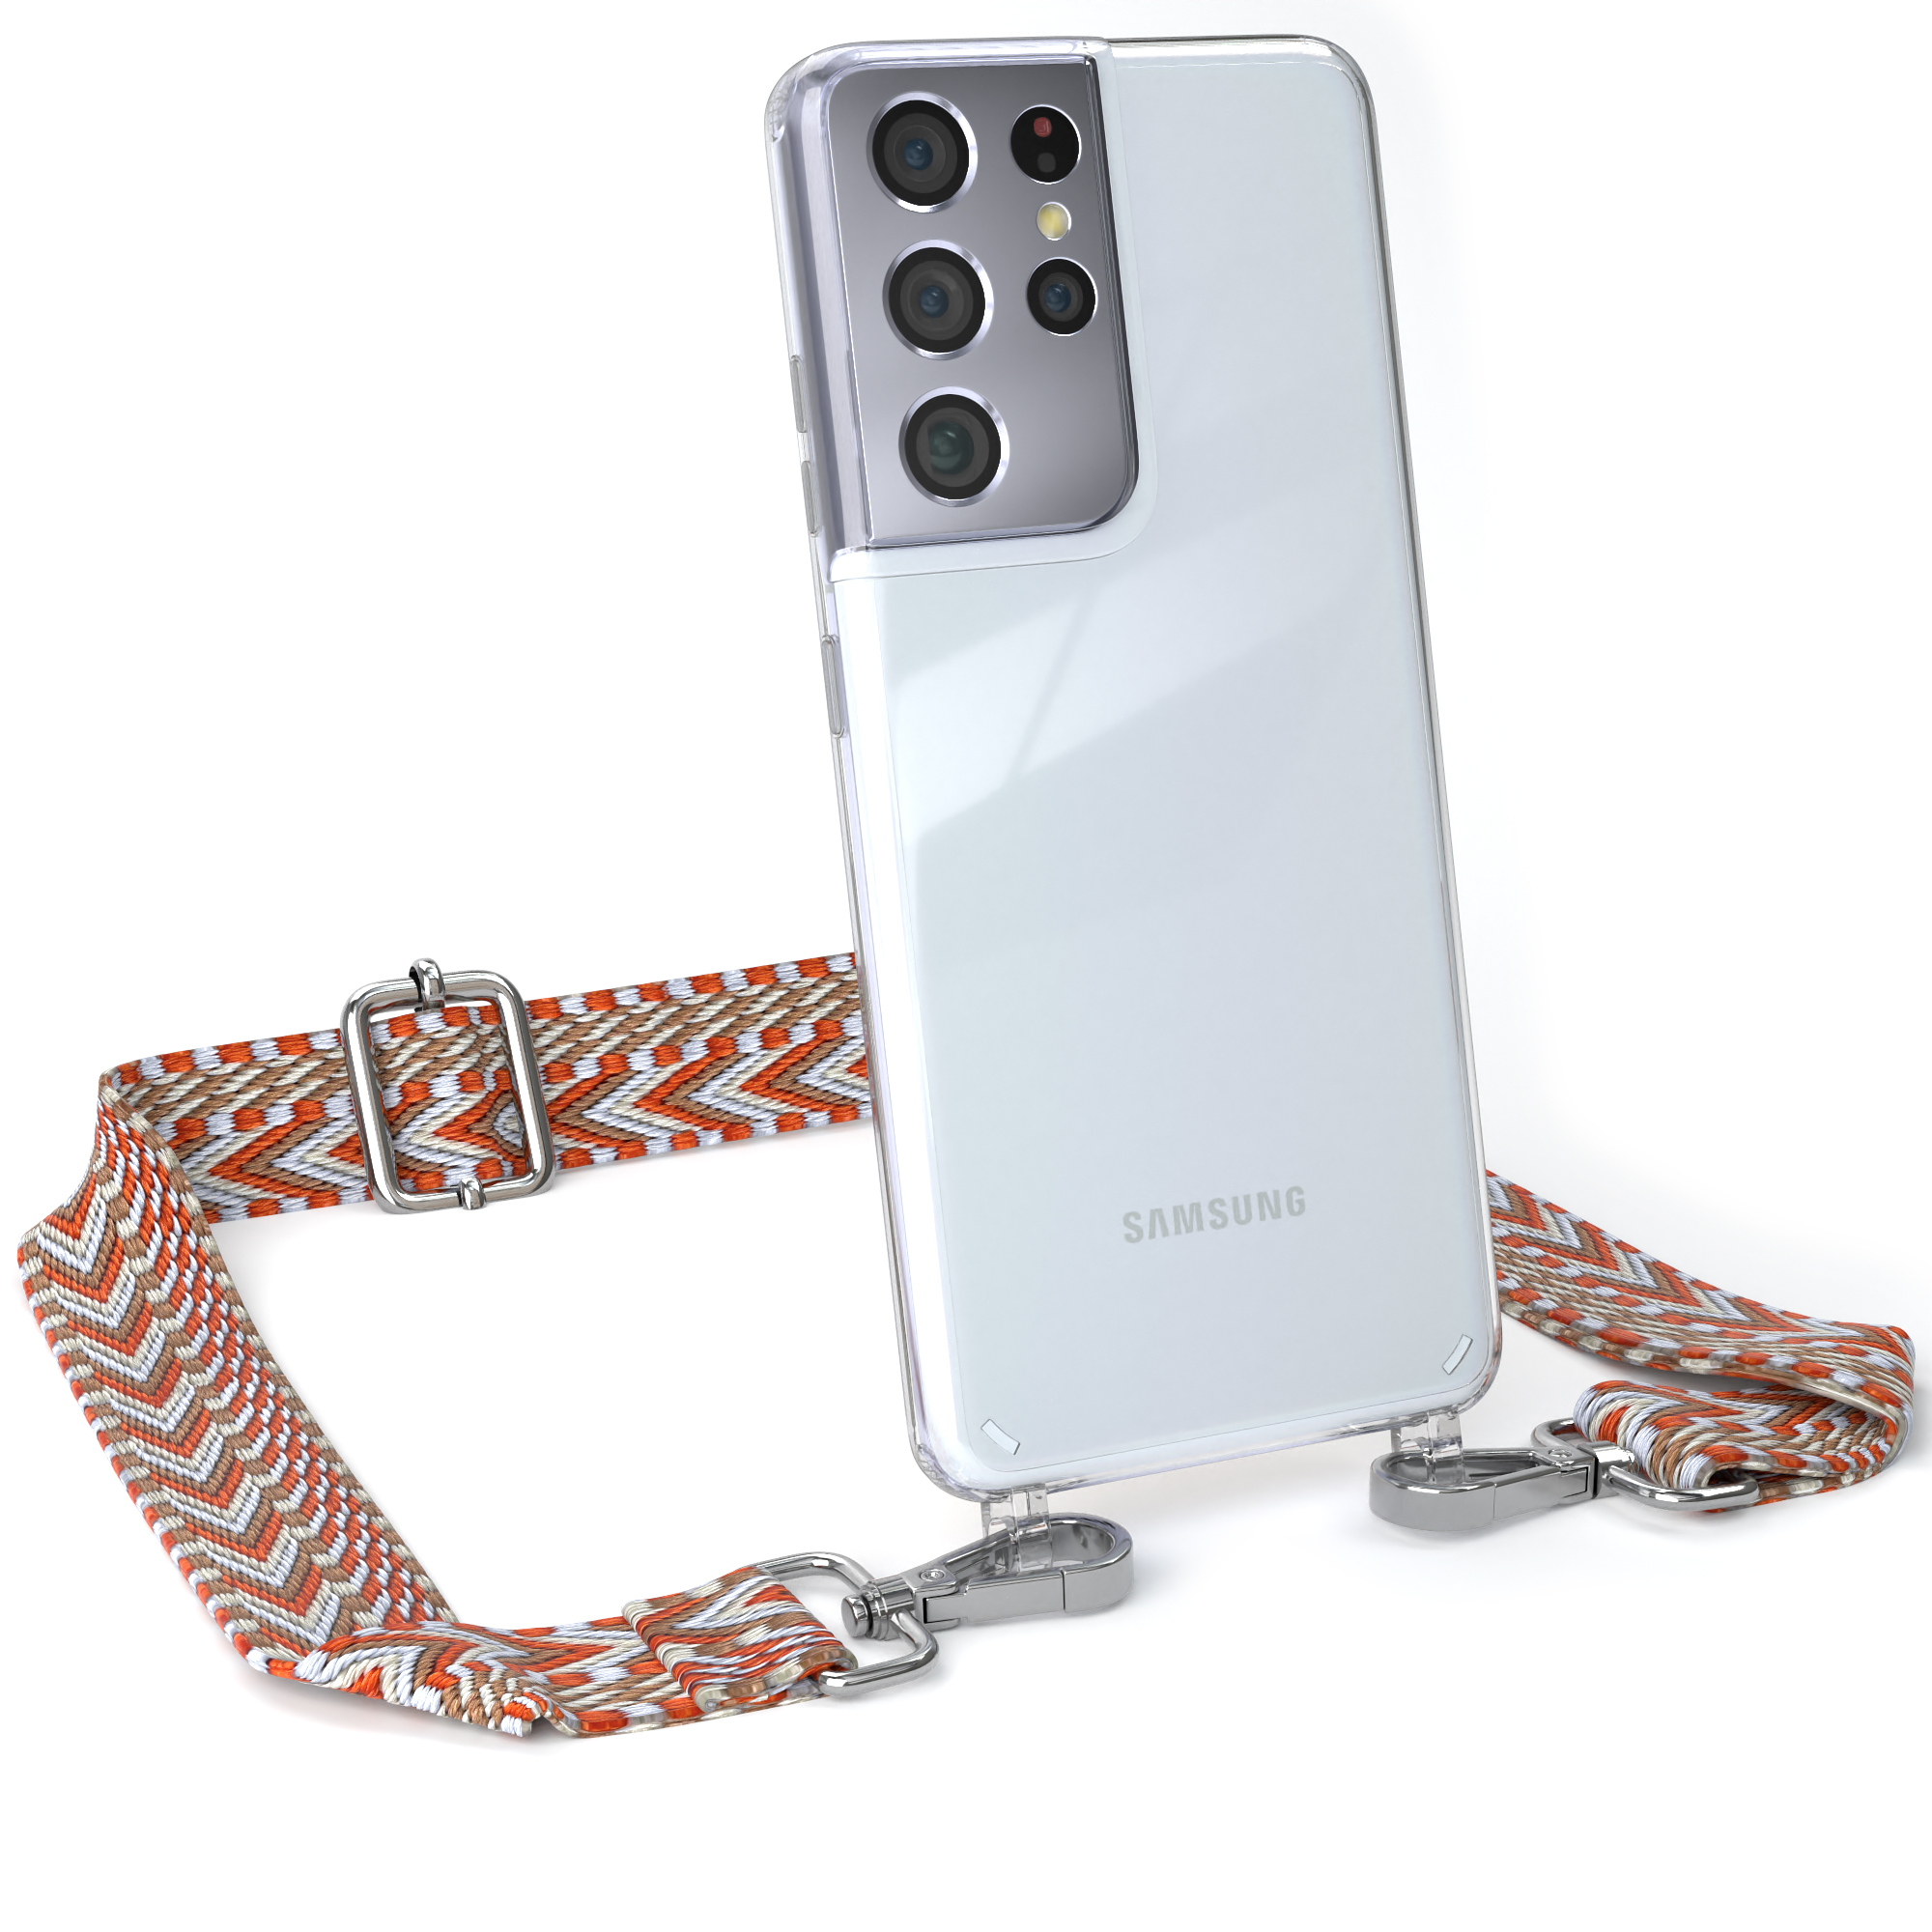 S21 Umhängetasche, Hellblau Ultra Samsung, EAZY CASE / Boho Rot mit Kordel Style, Galaxy 5G, Transparente Handyhülle